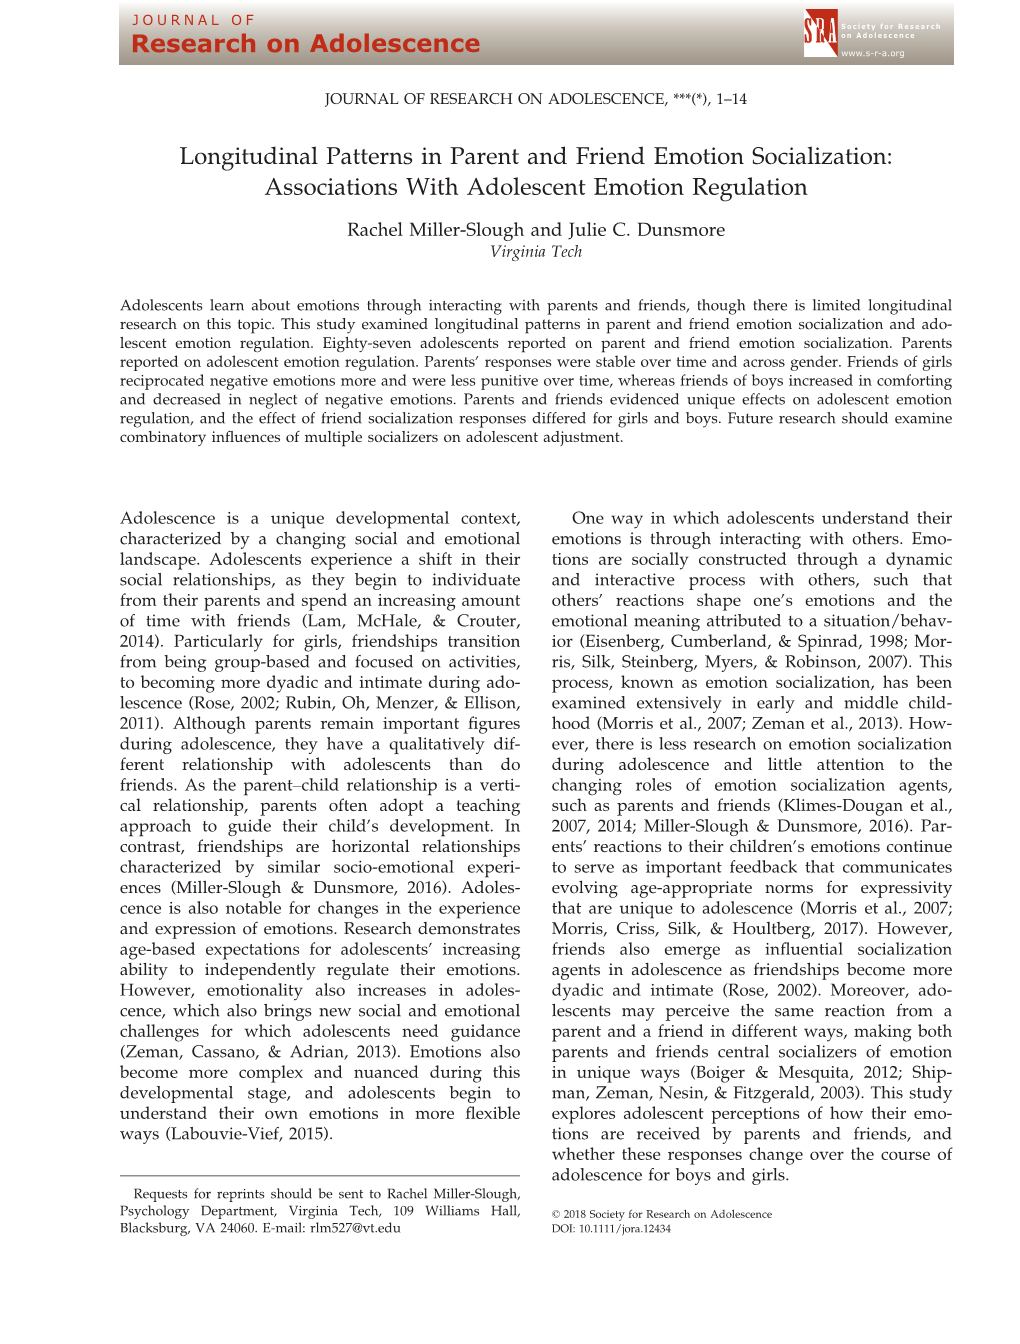 Associations with Adolescent Emotion Regulation